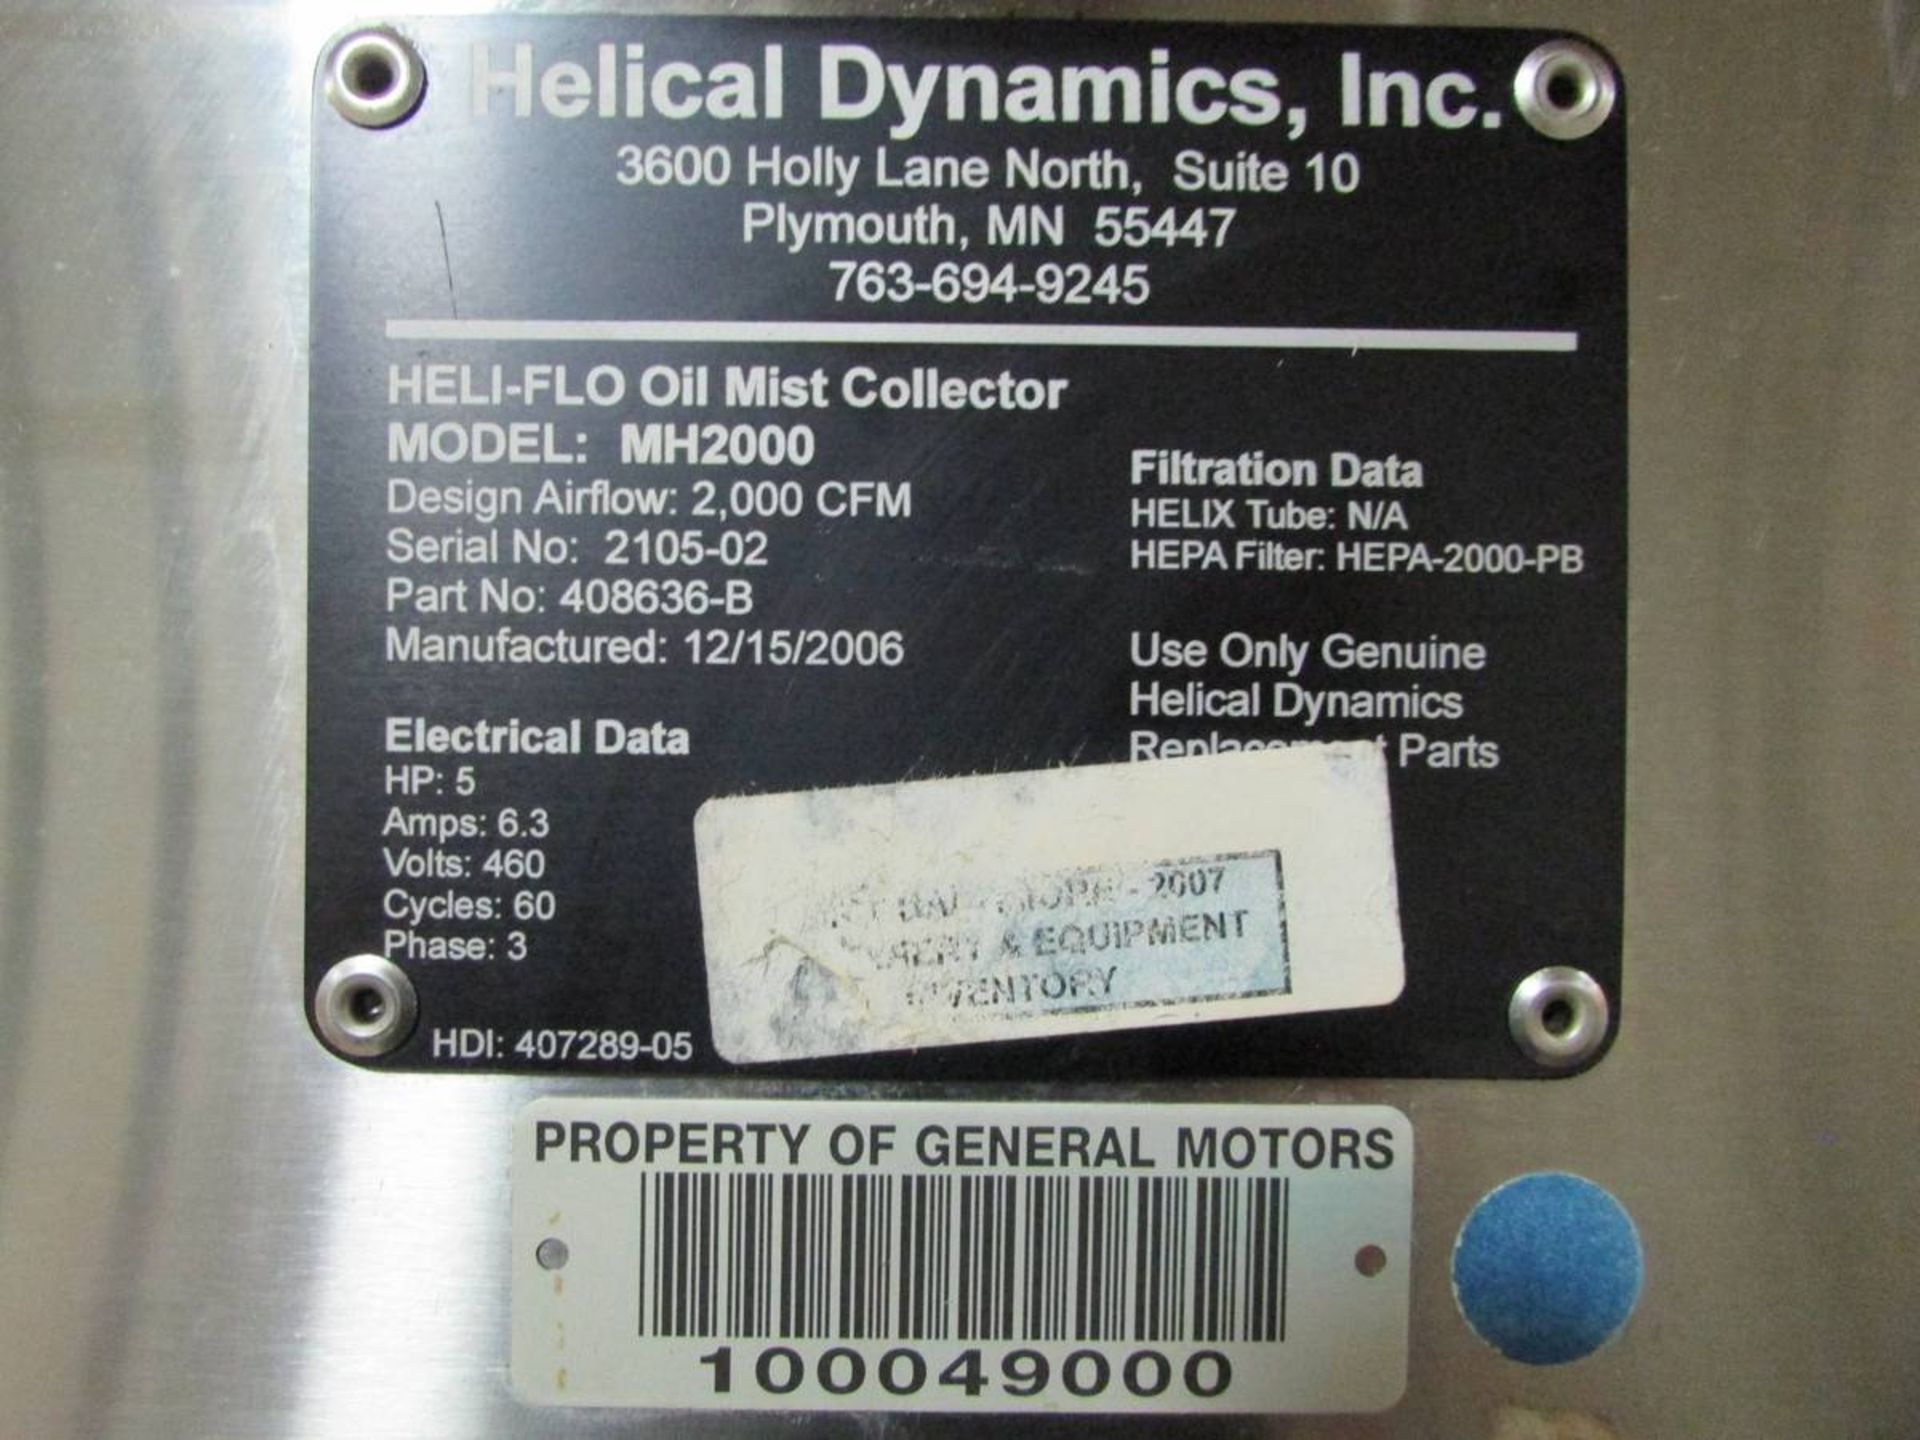 2006 Hilical Dynamics Inc. MH2000 Heli-Flo Oil Mist Collector - Image 7 of 7